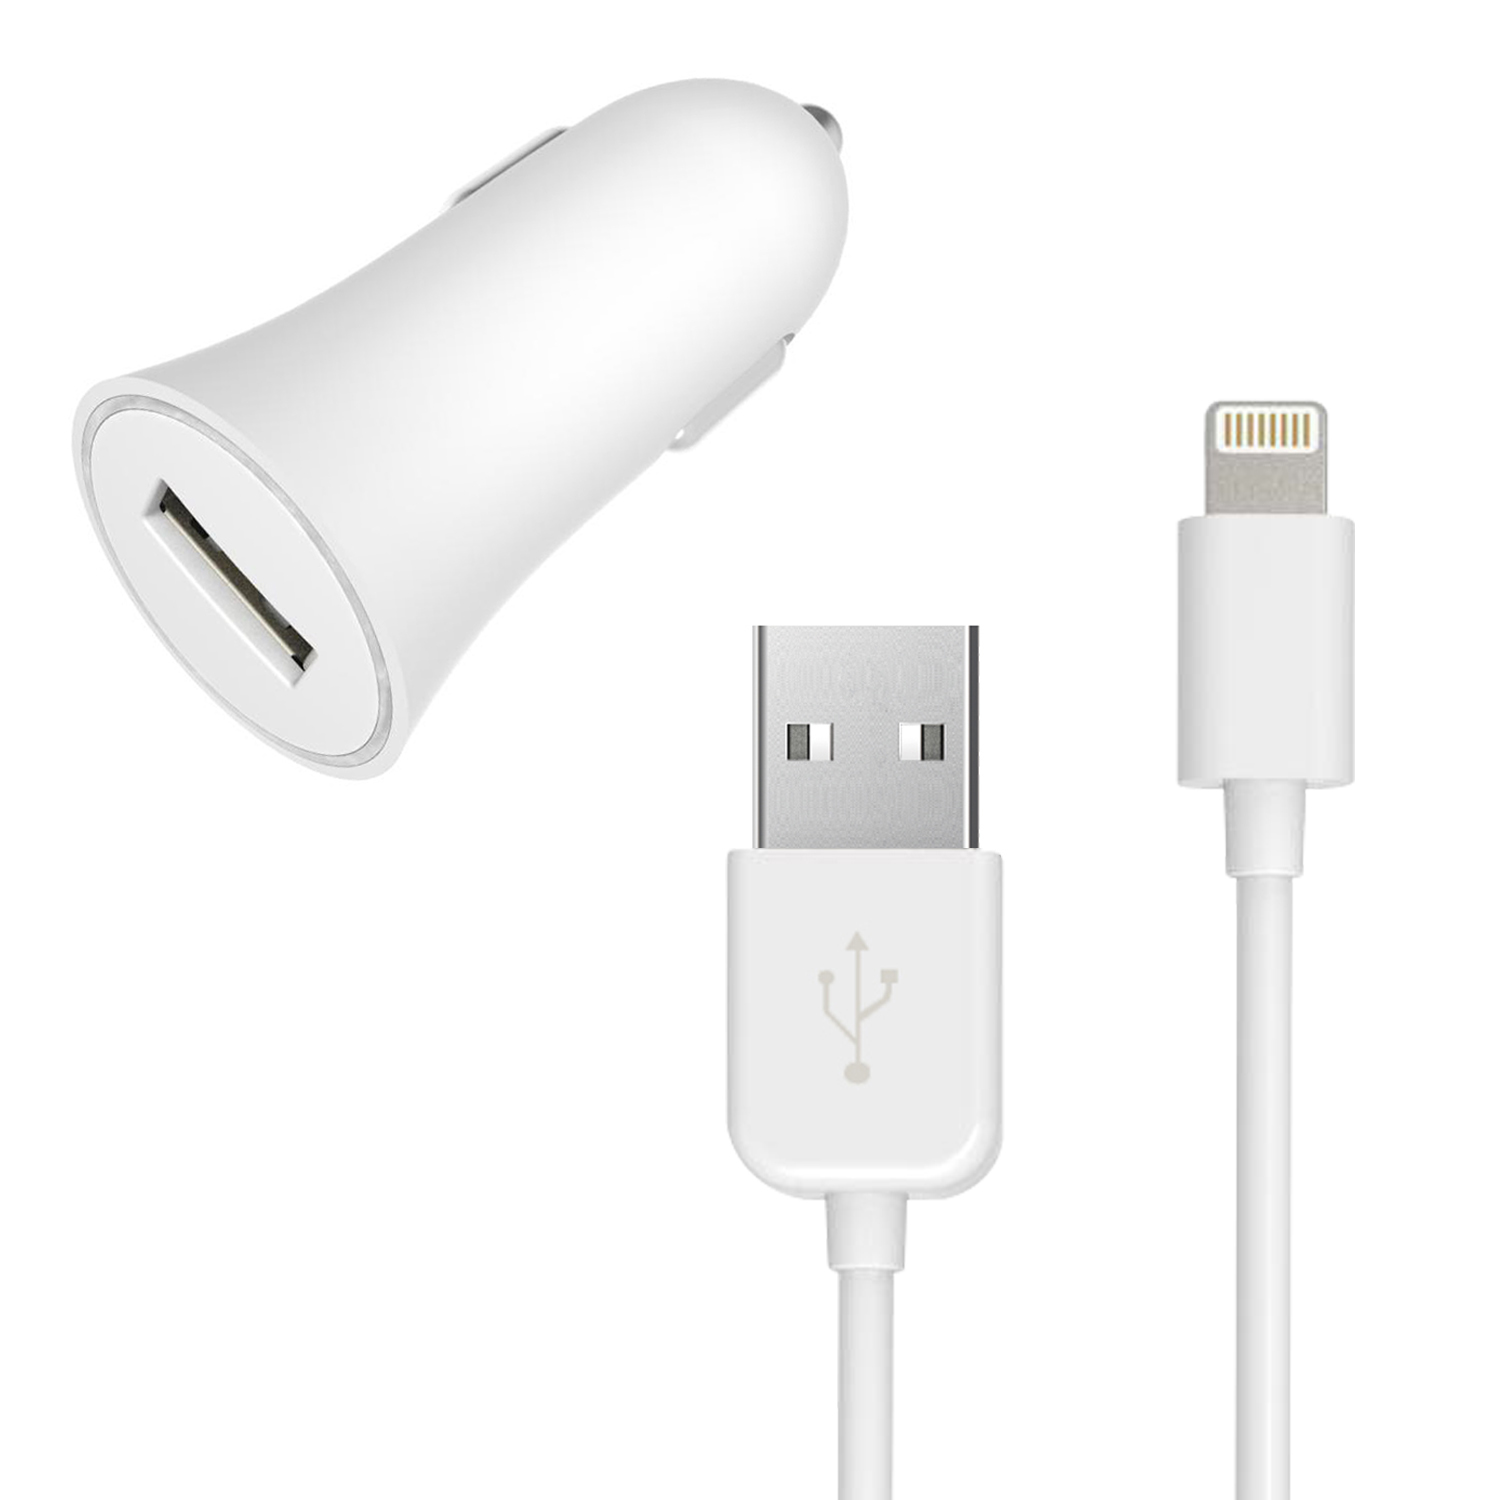 Chargeur Allume cigare rapide 1 USB + Câble Lightning pour iPhone, iPad 1m - Schneider